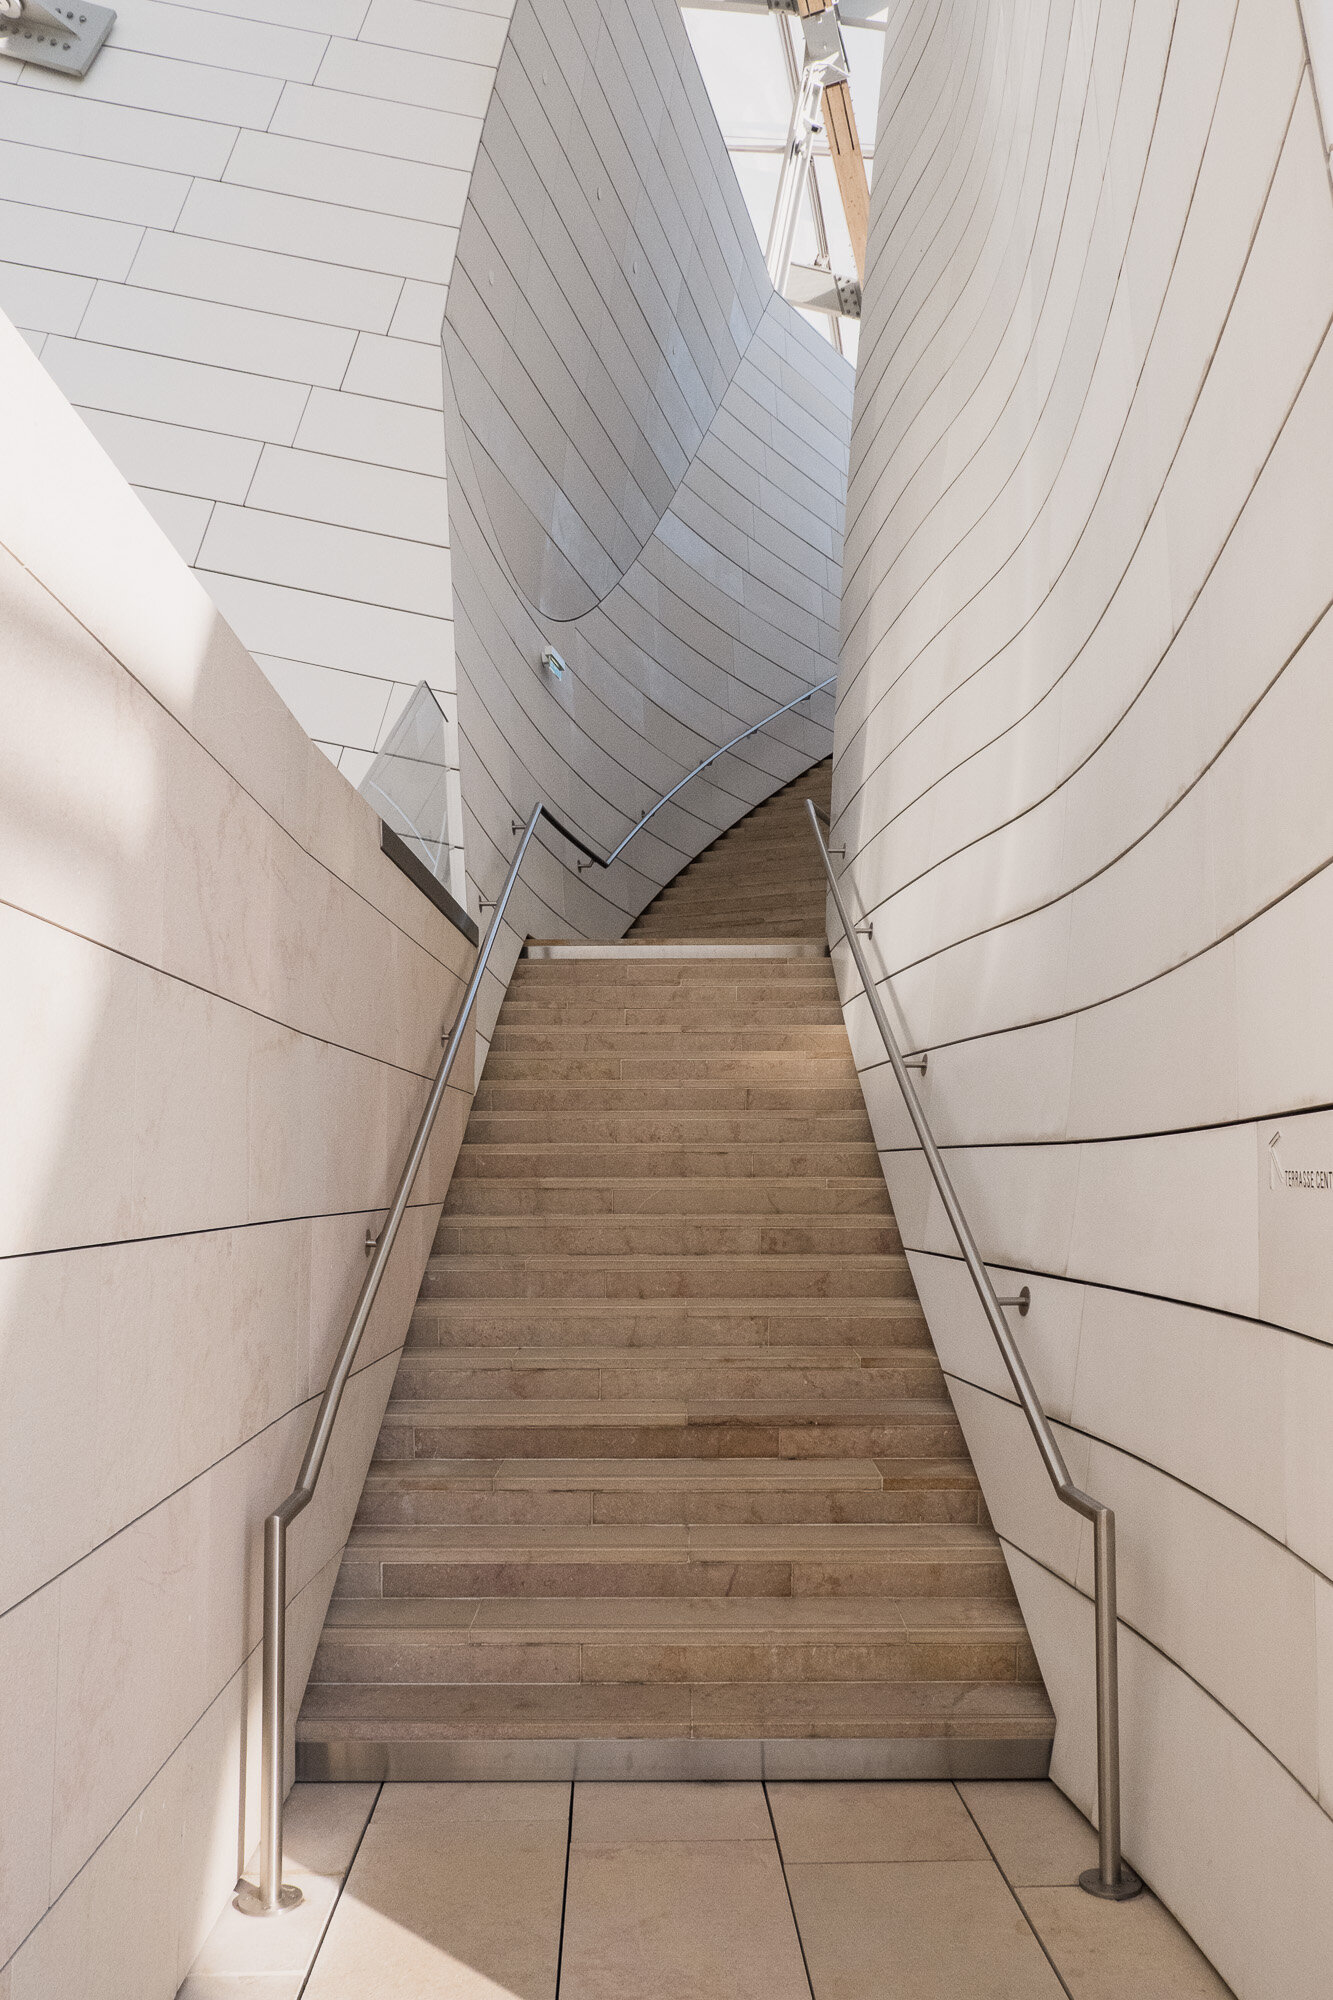 Louis Vuitton Foundation in Paris, an architectural wonder